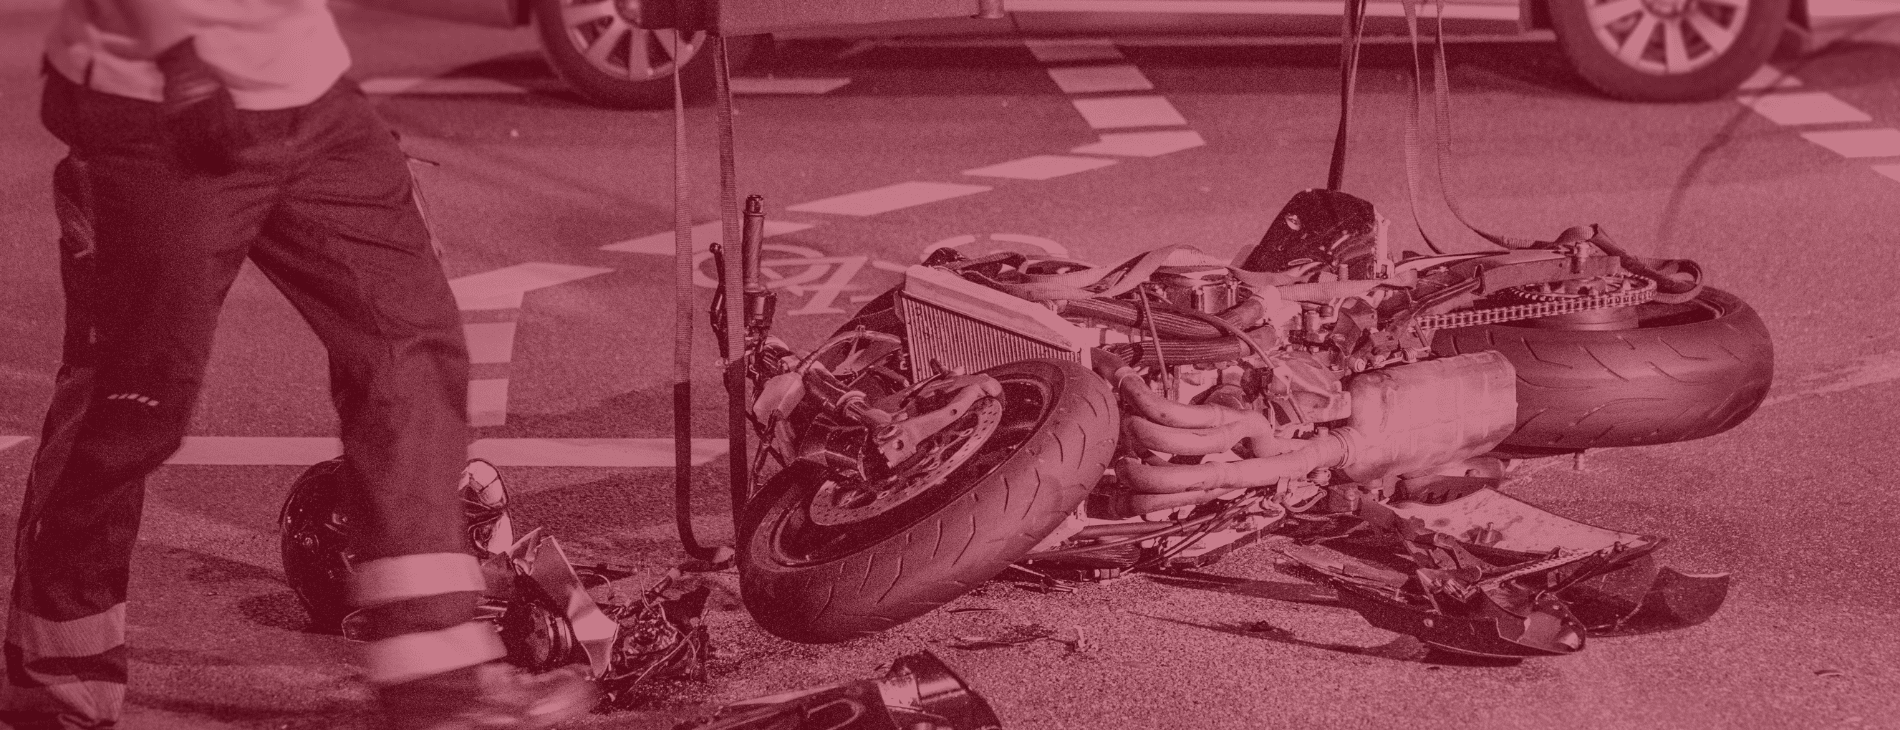 Highway 99 motorcycle crash